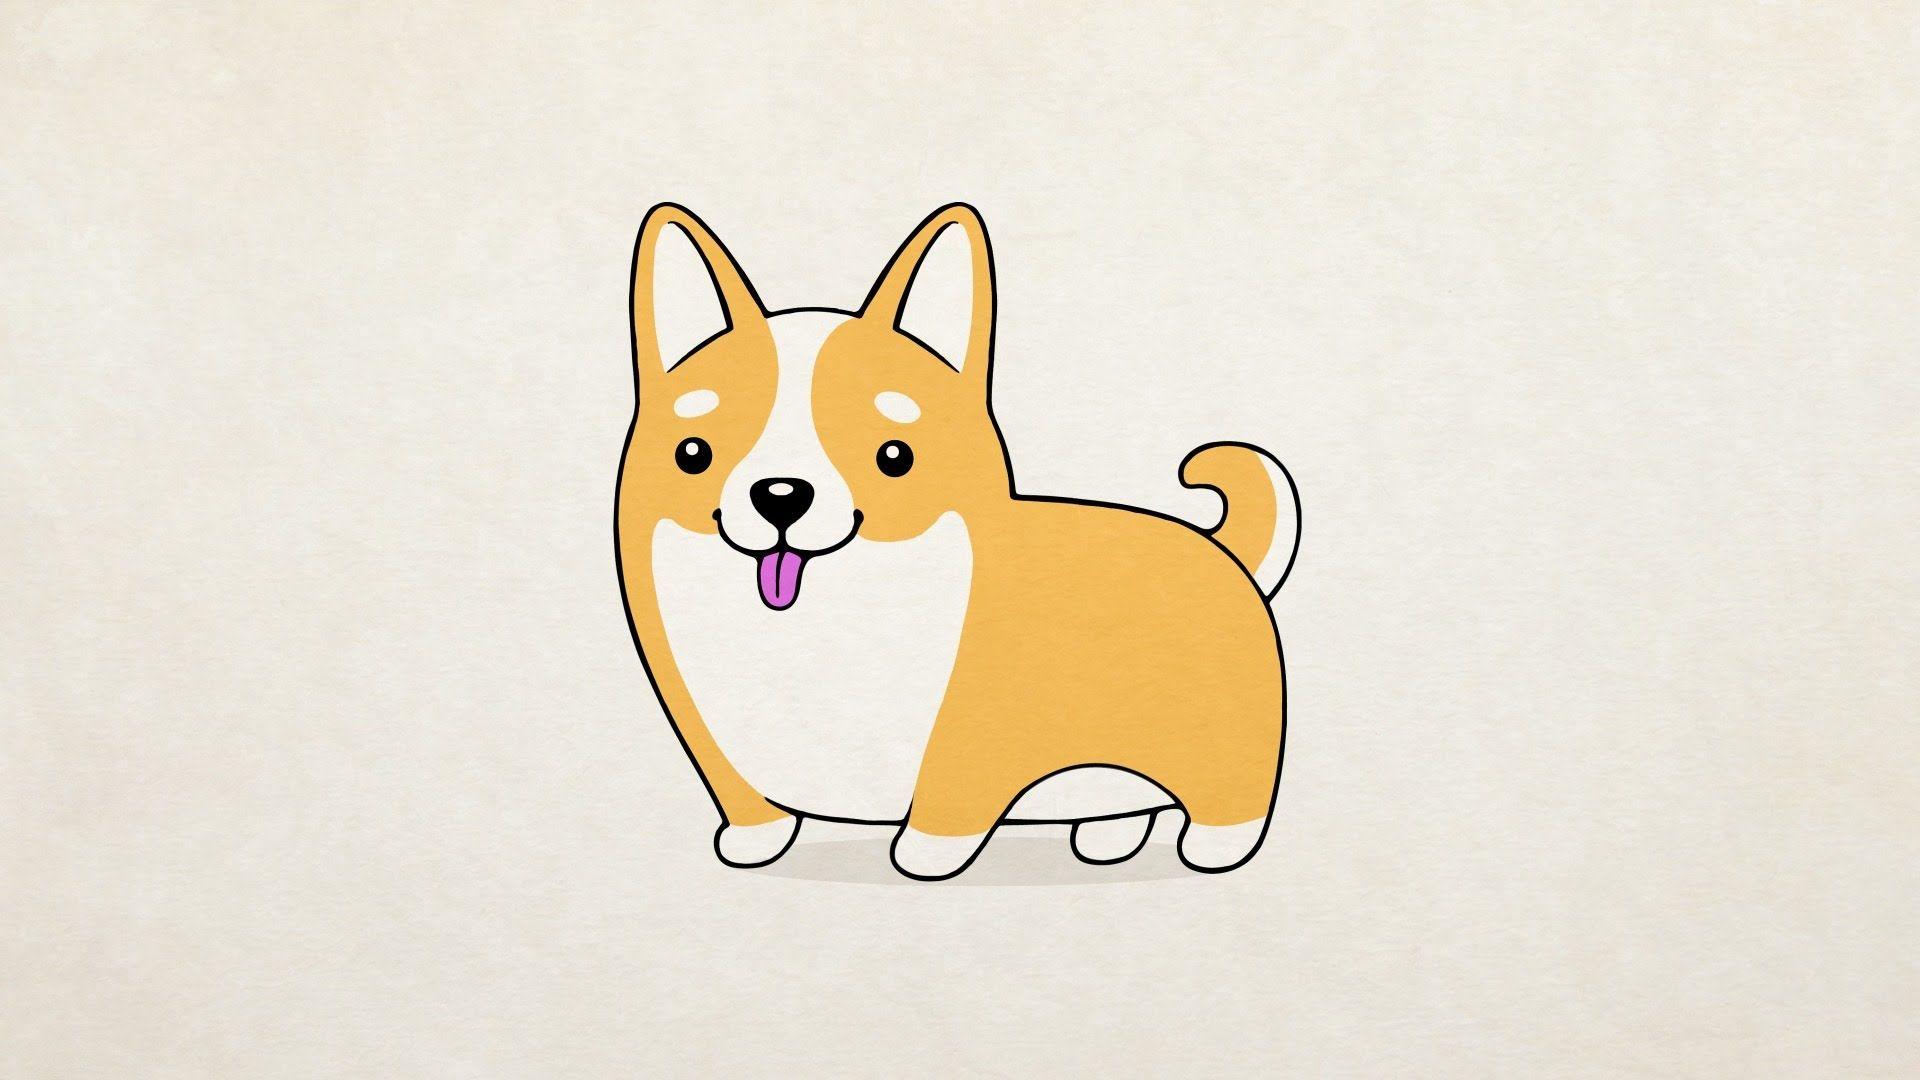 Drawing Cute Animal Wallpapers - Top Free Drawing Cute Animal